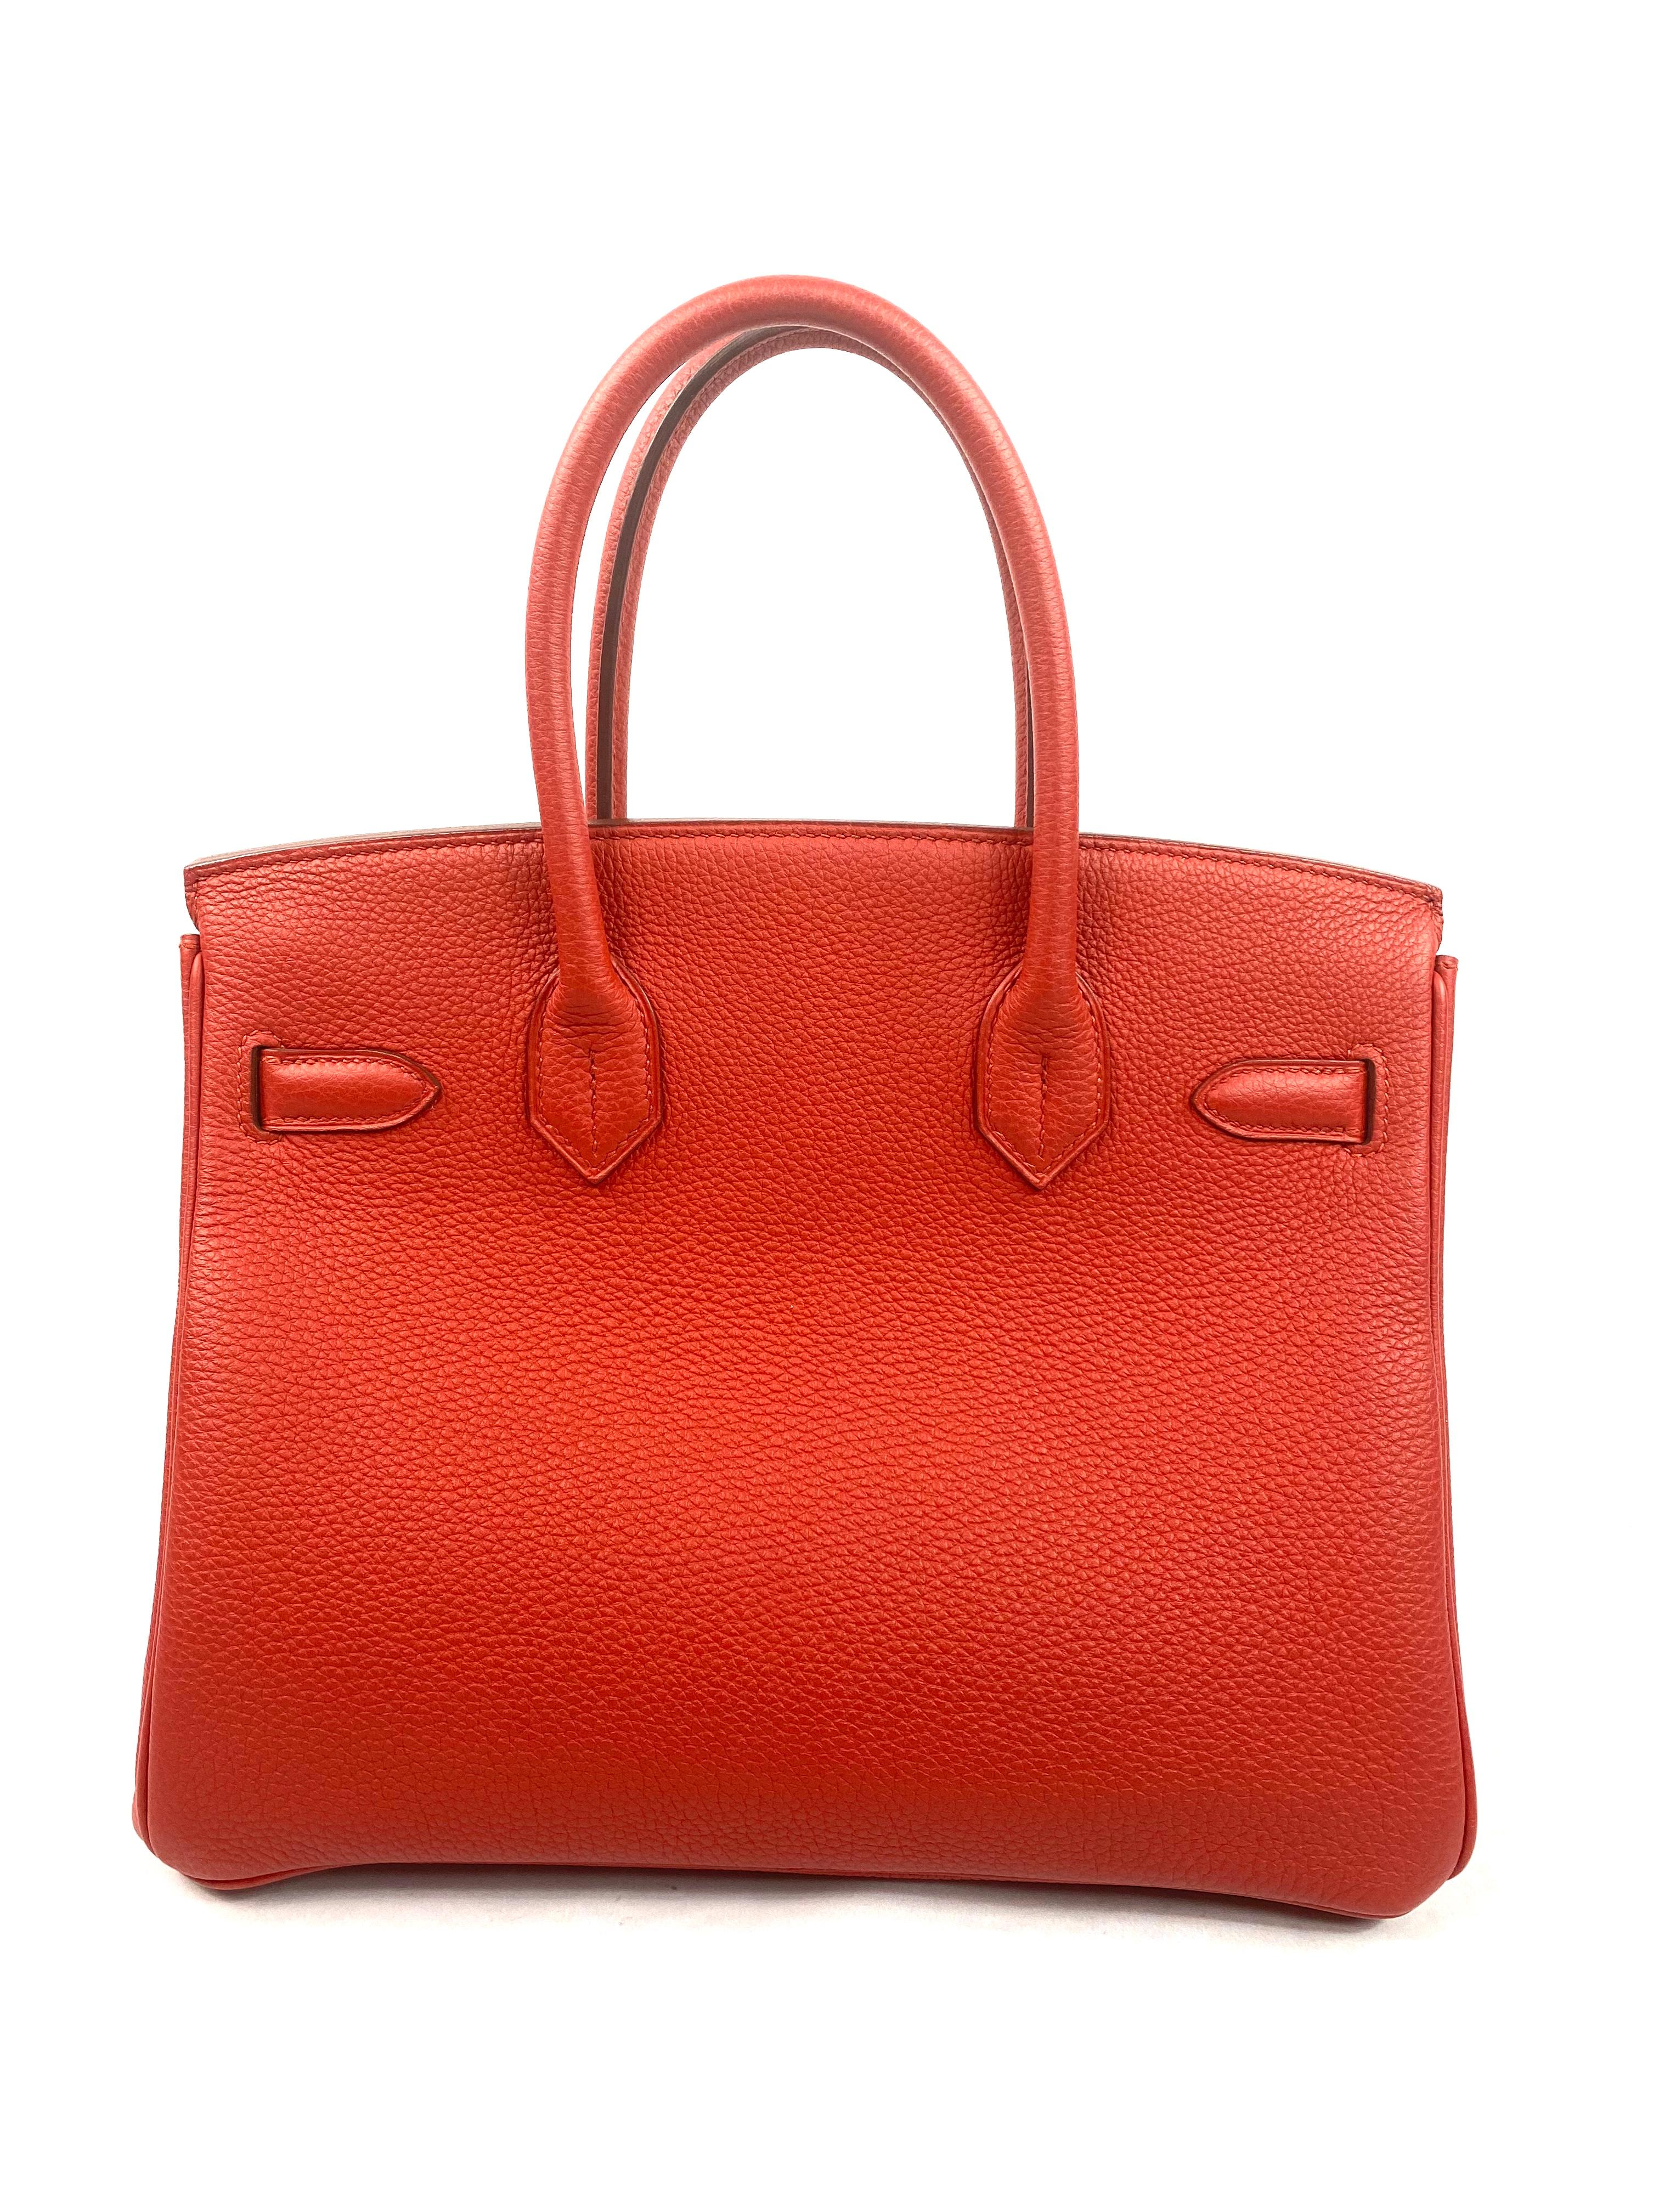 Hermes Birkin 30 Veau Togo Geranium Red Vermillon Handbag at 